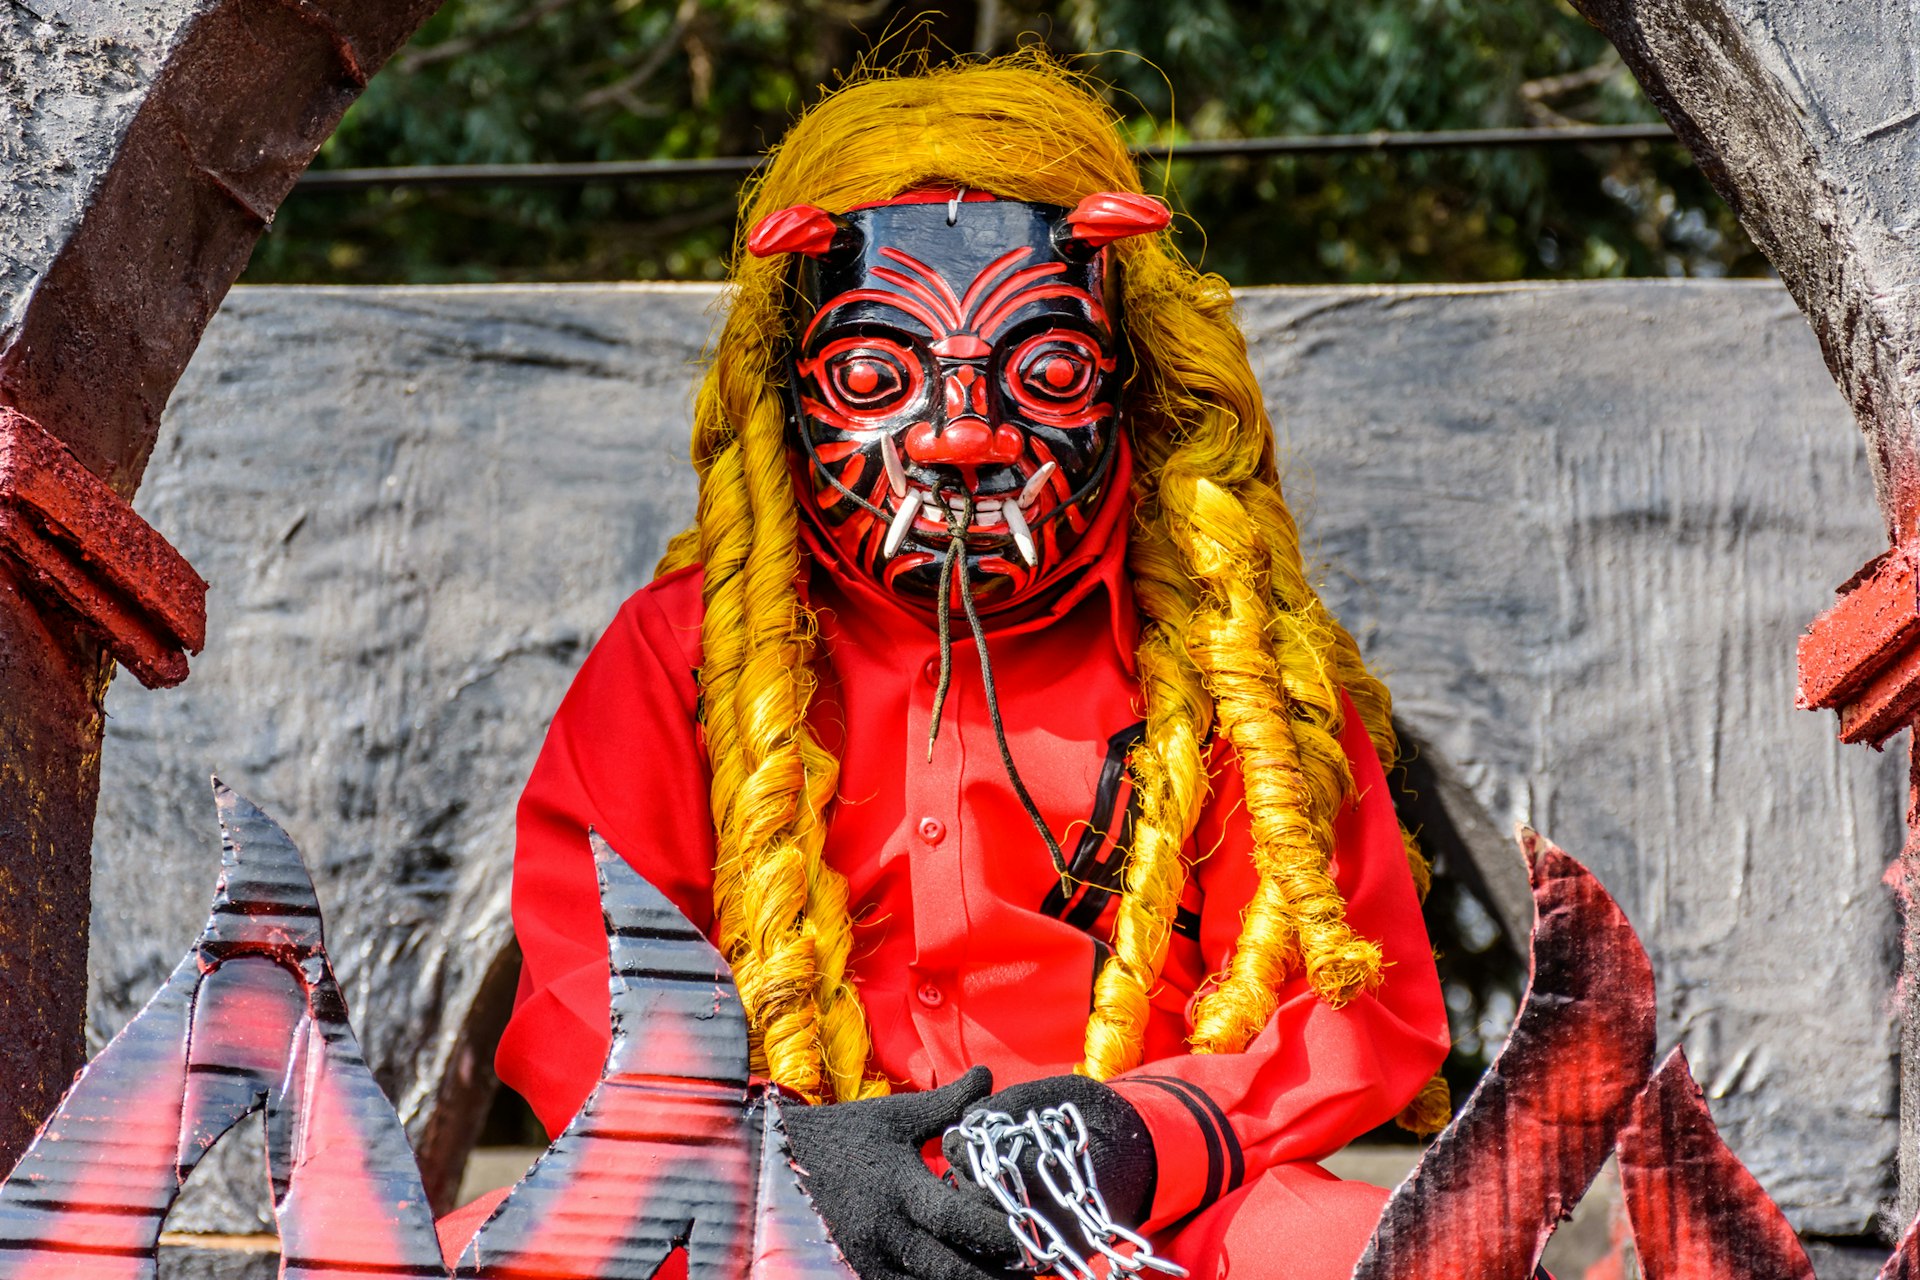 Local in traditional folk dance devil mask & costume in Cuidad Vieja, Guatemala 